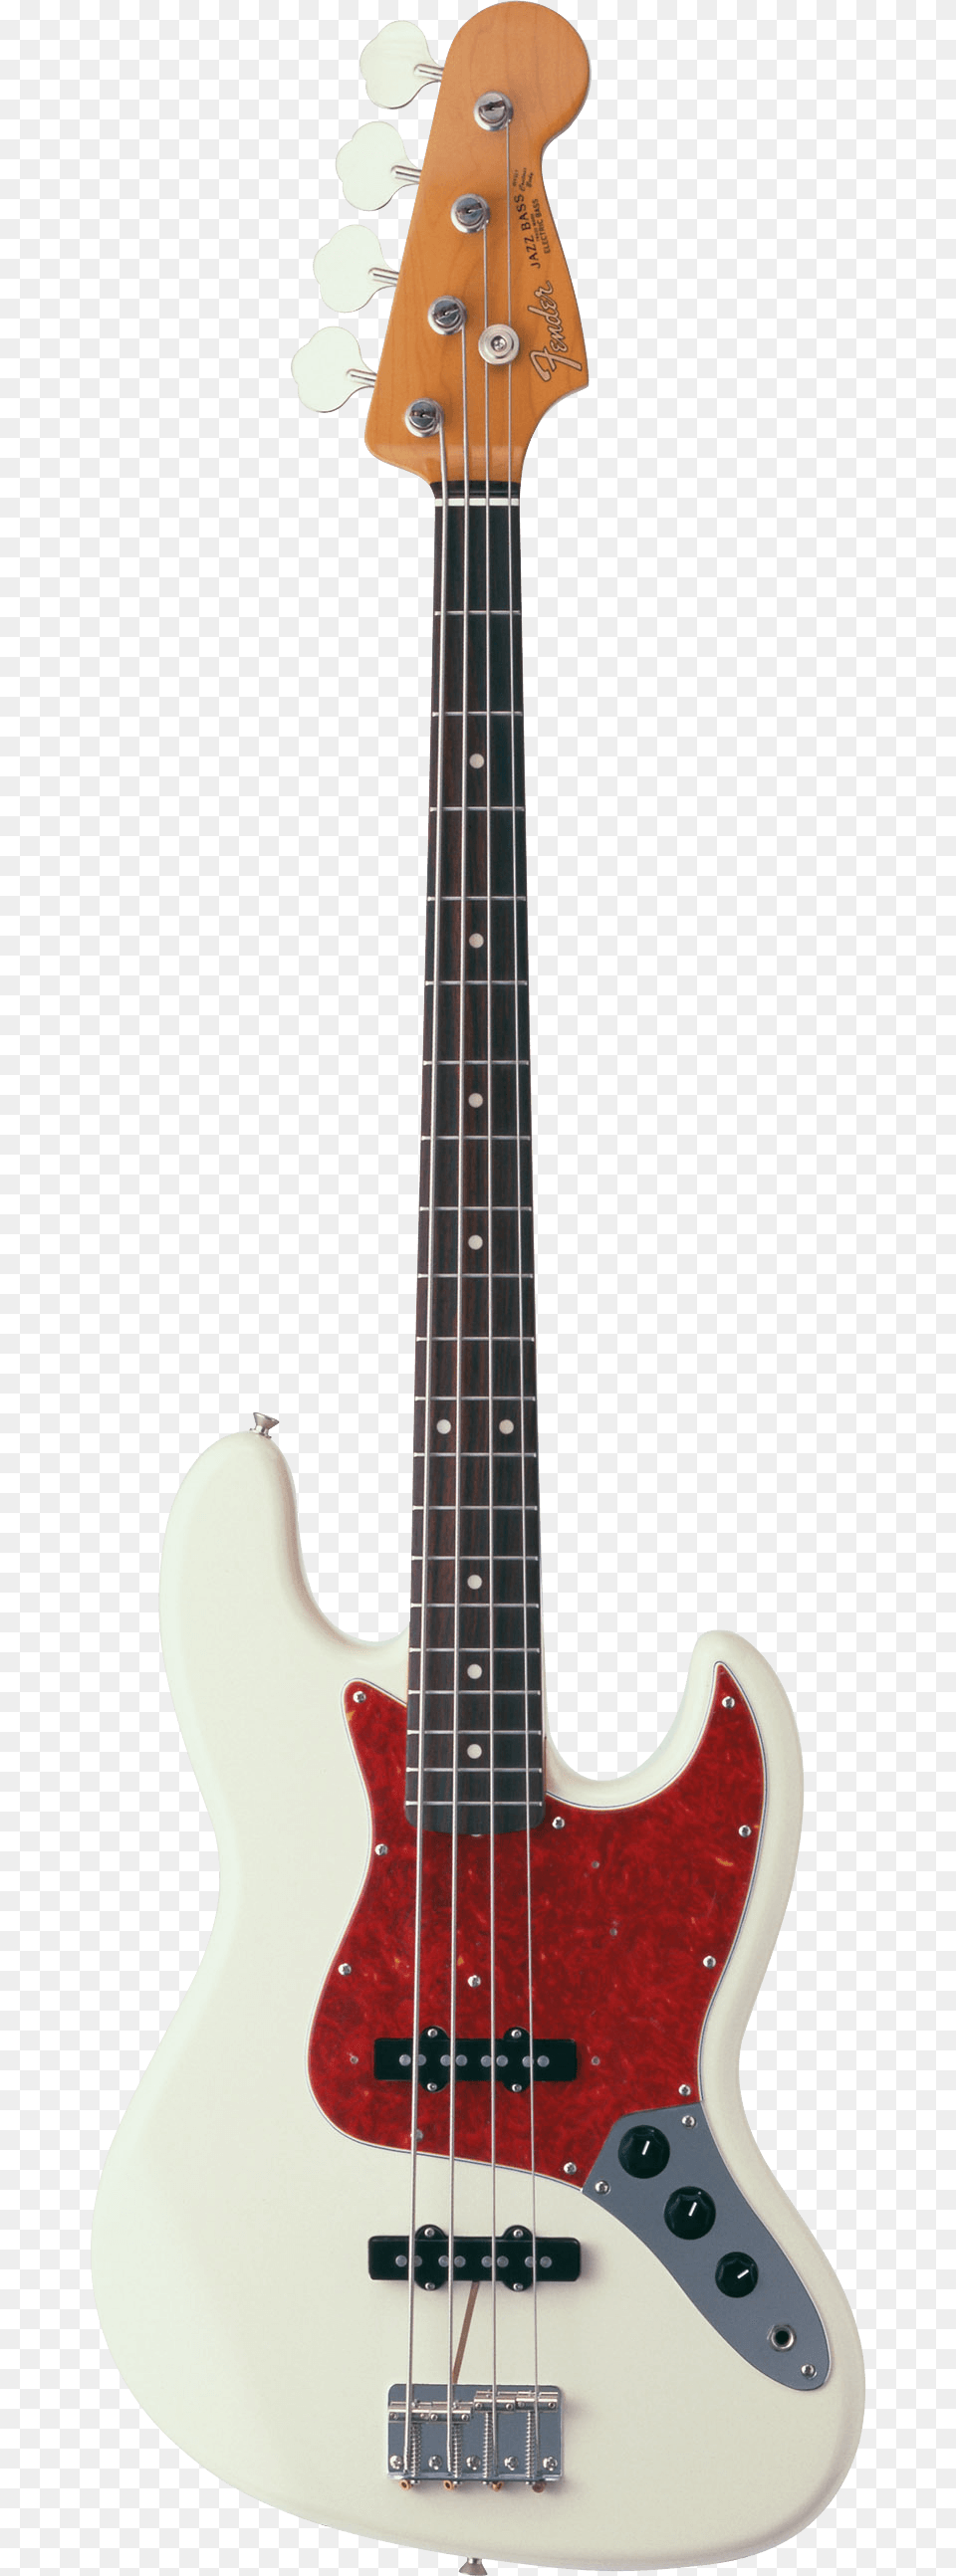 Electric Guitar Image, Bass Guitar, Musical Instrument Free Transparent Png